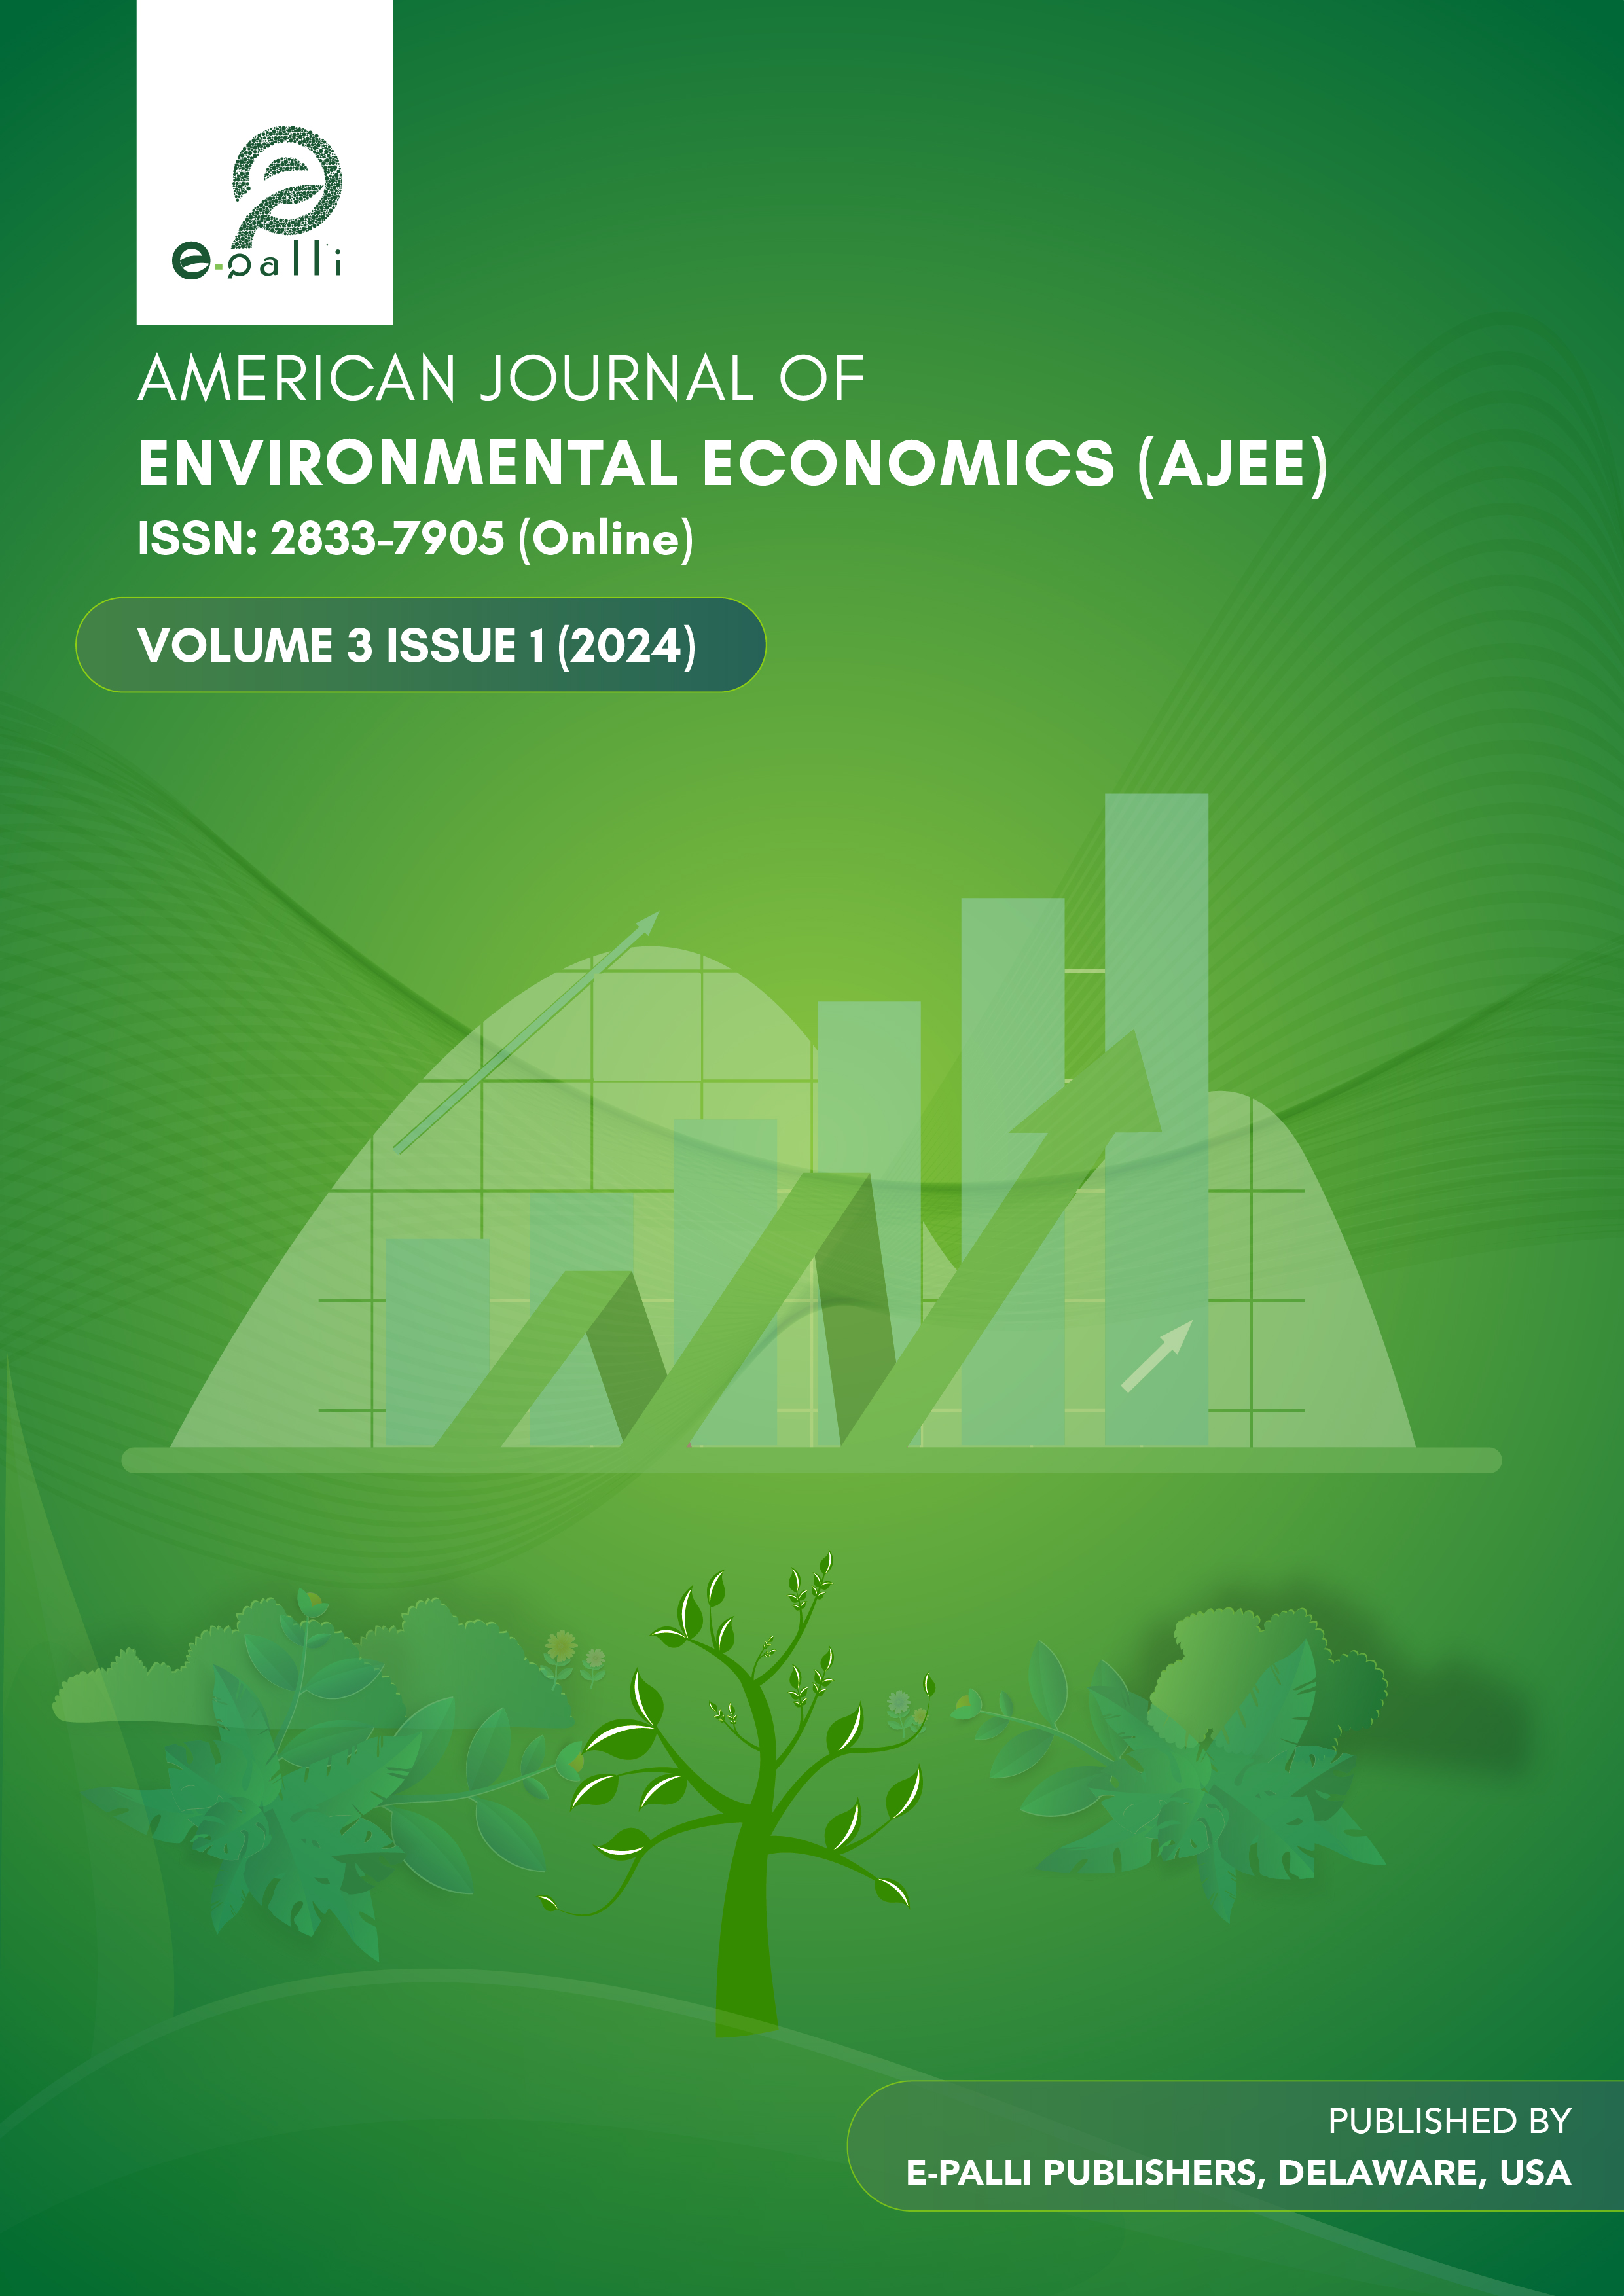                     View Vol. 3 No. 1 (2024): American Journal of Environmental Economics
                